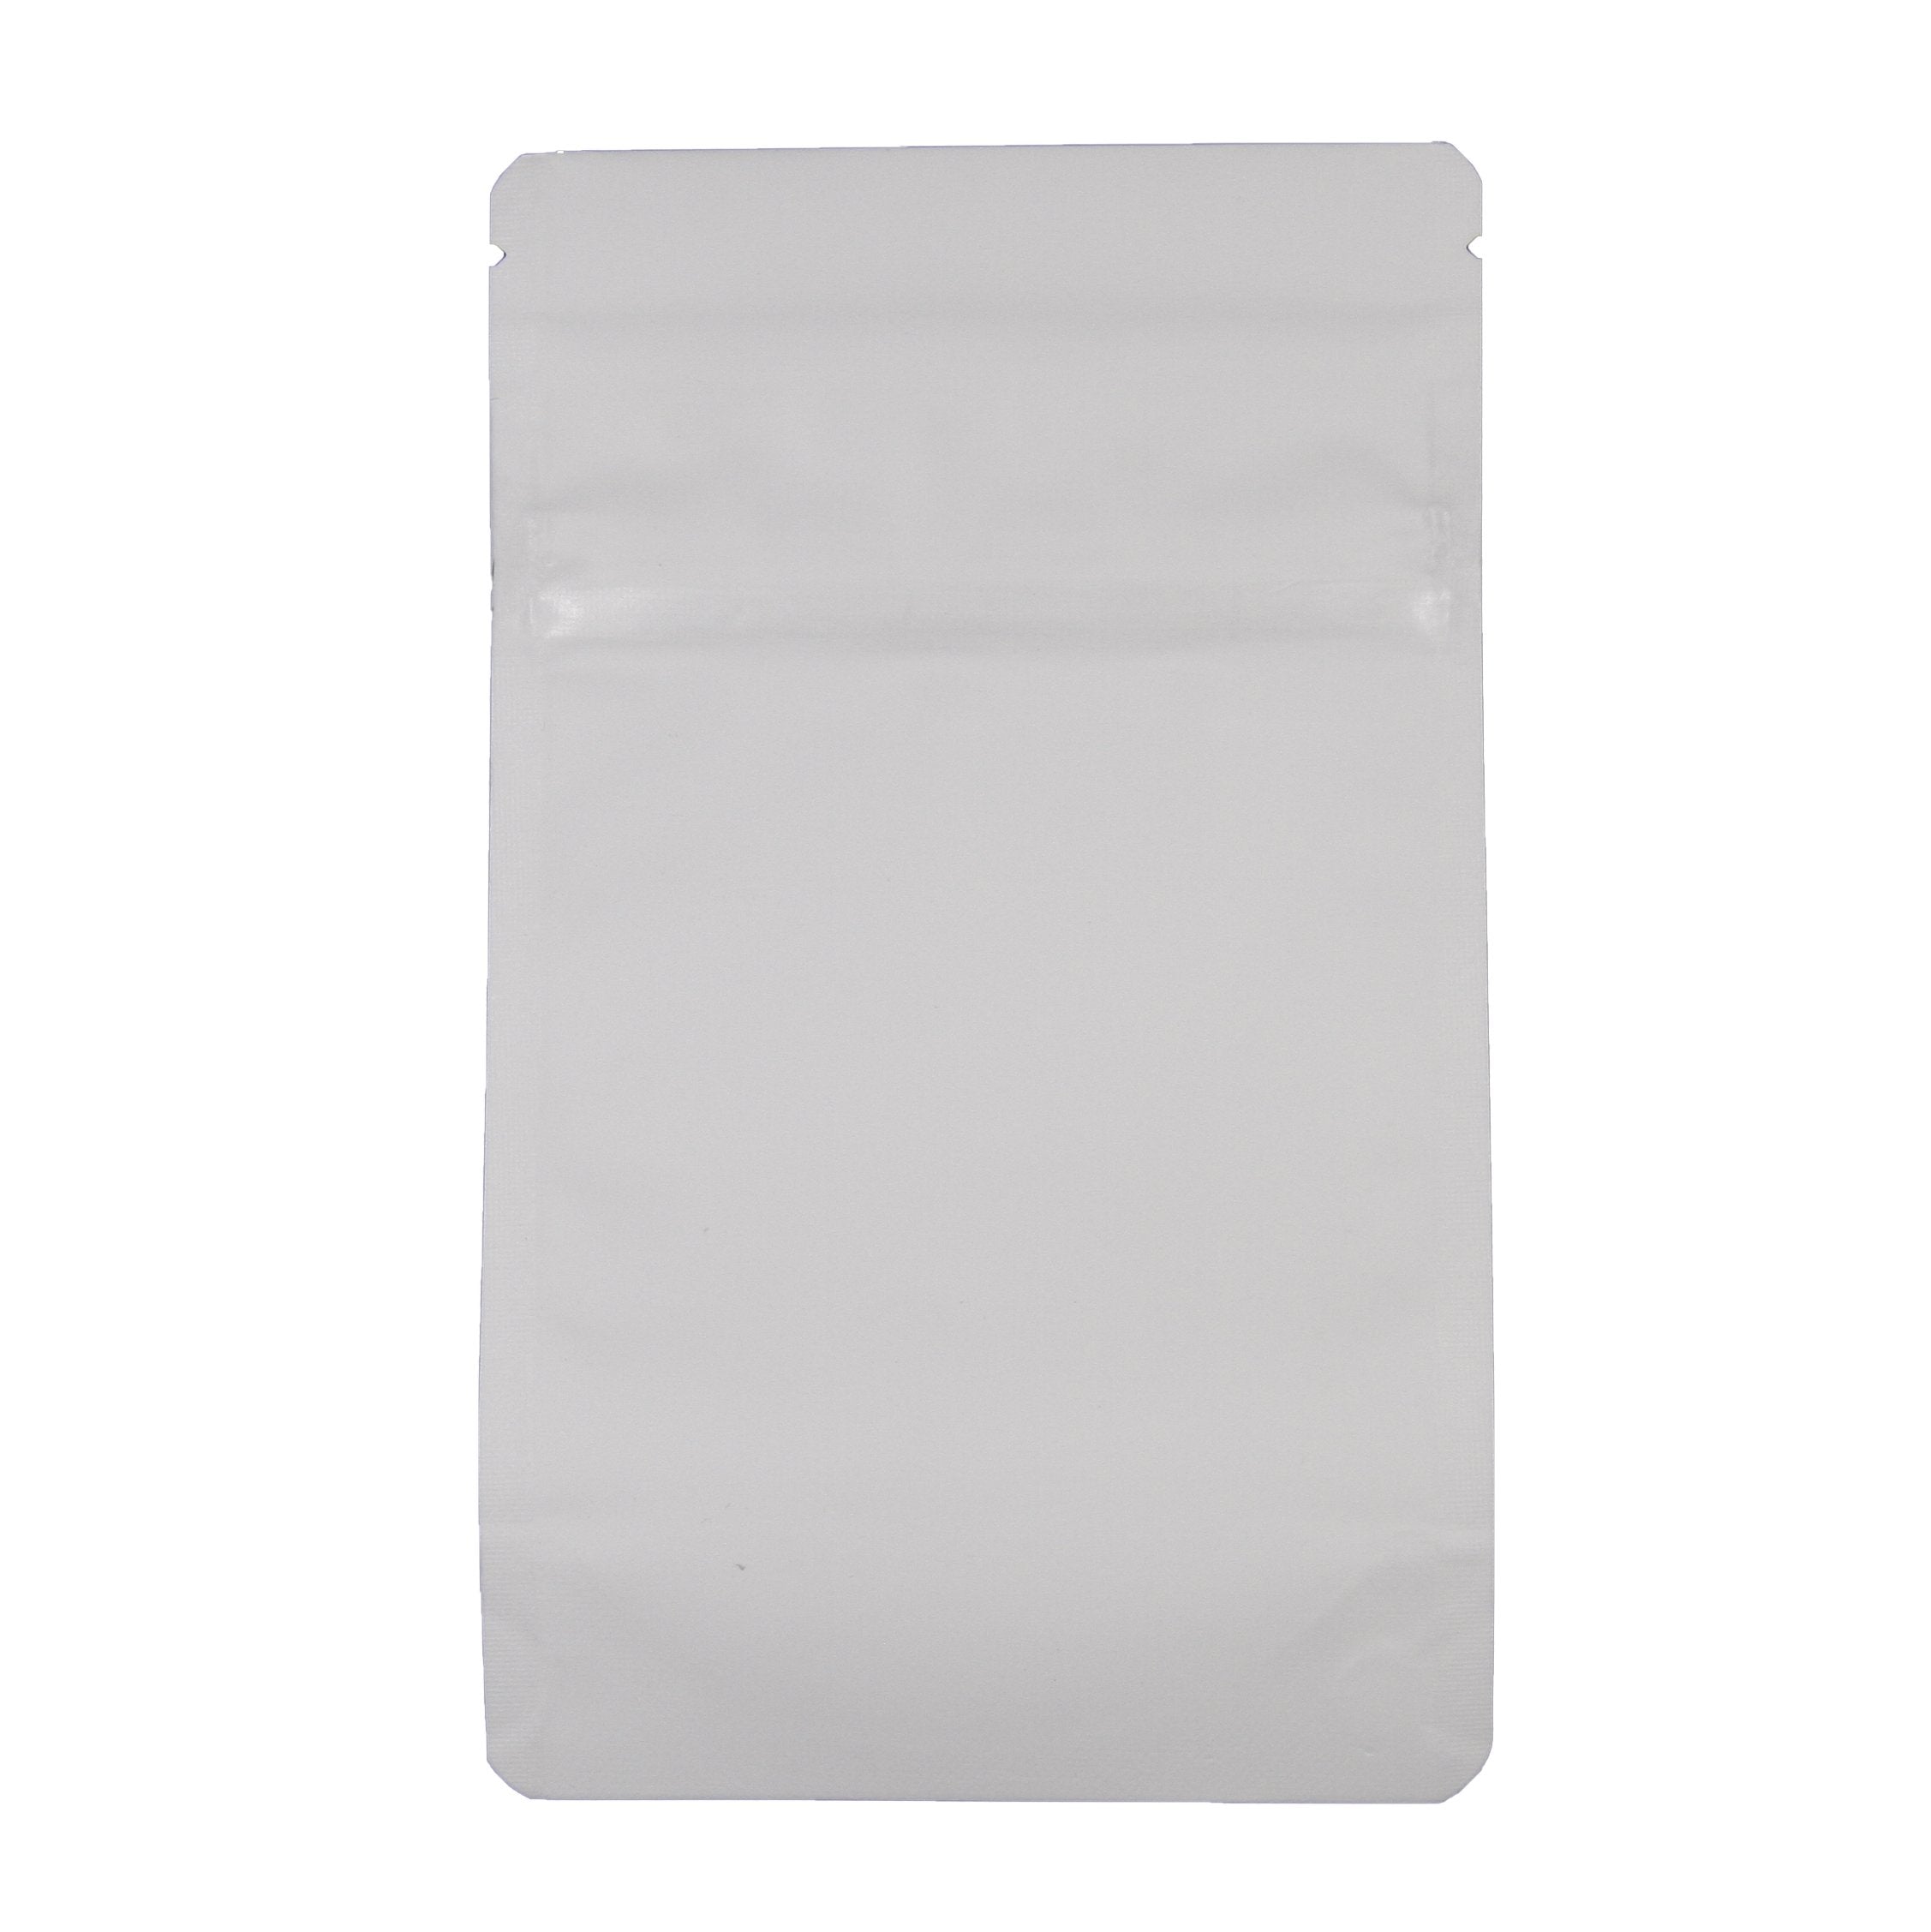 Bag King Child-Resistant Opaque Bag (1/8th oz) Matte White